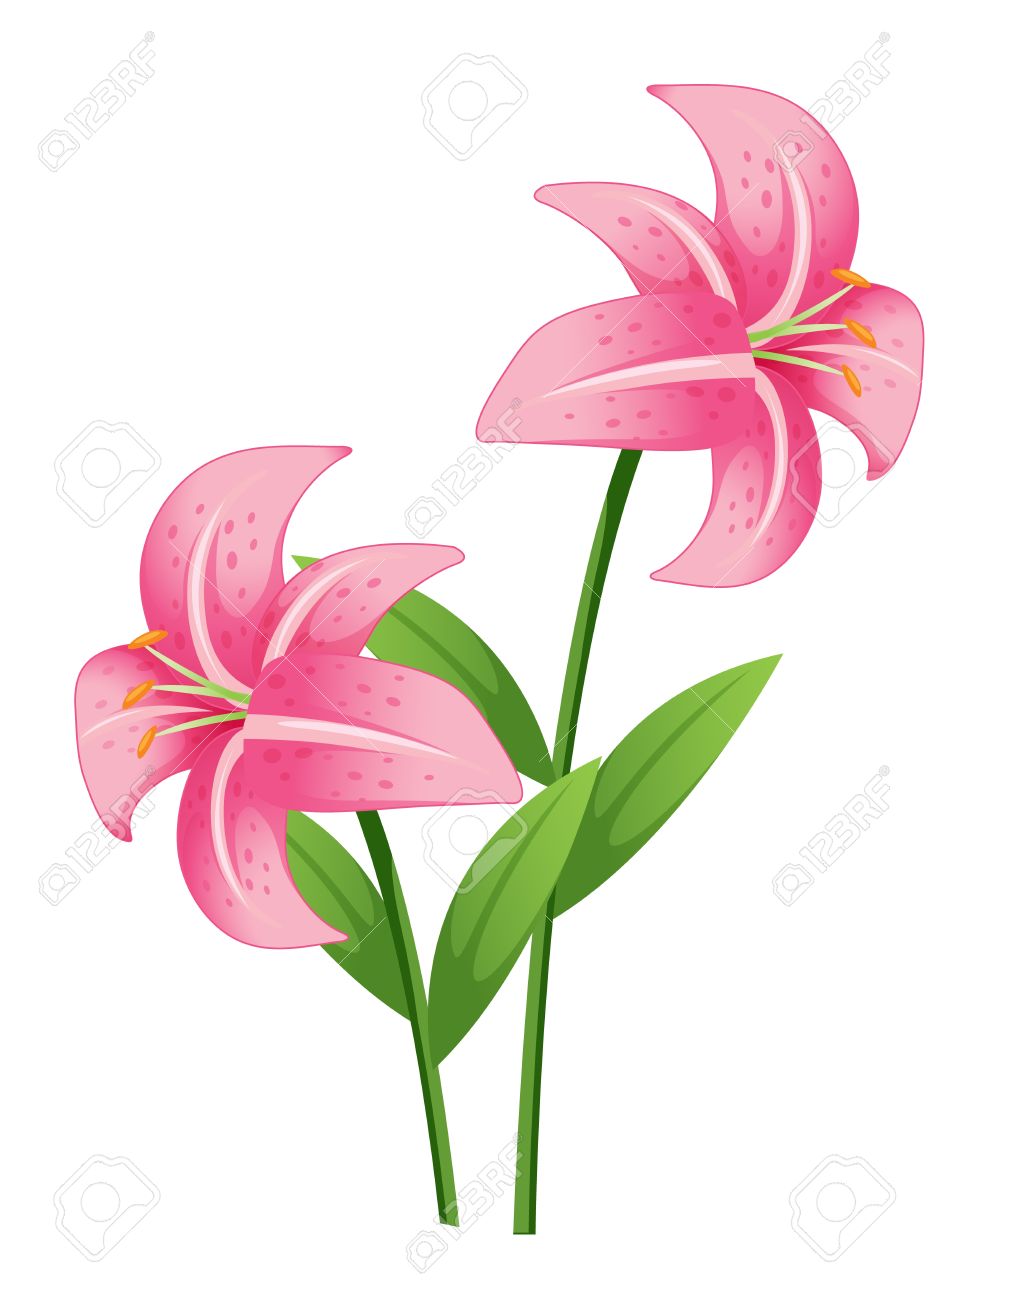 Stargazer lily cliparts free download jpg